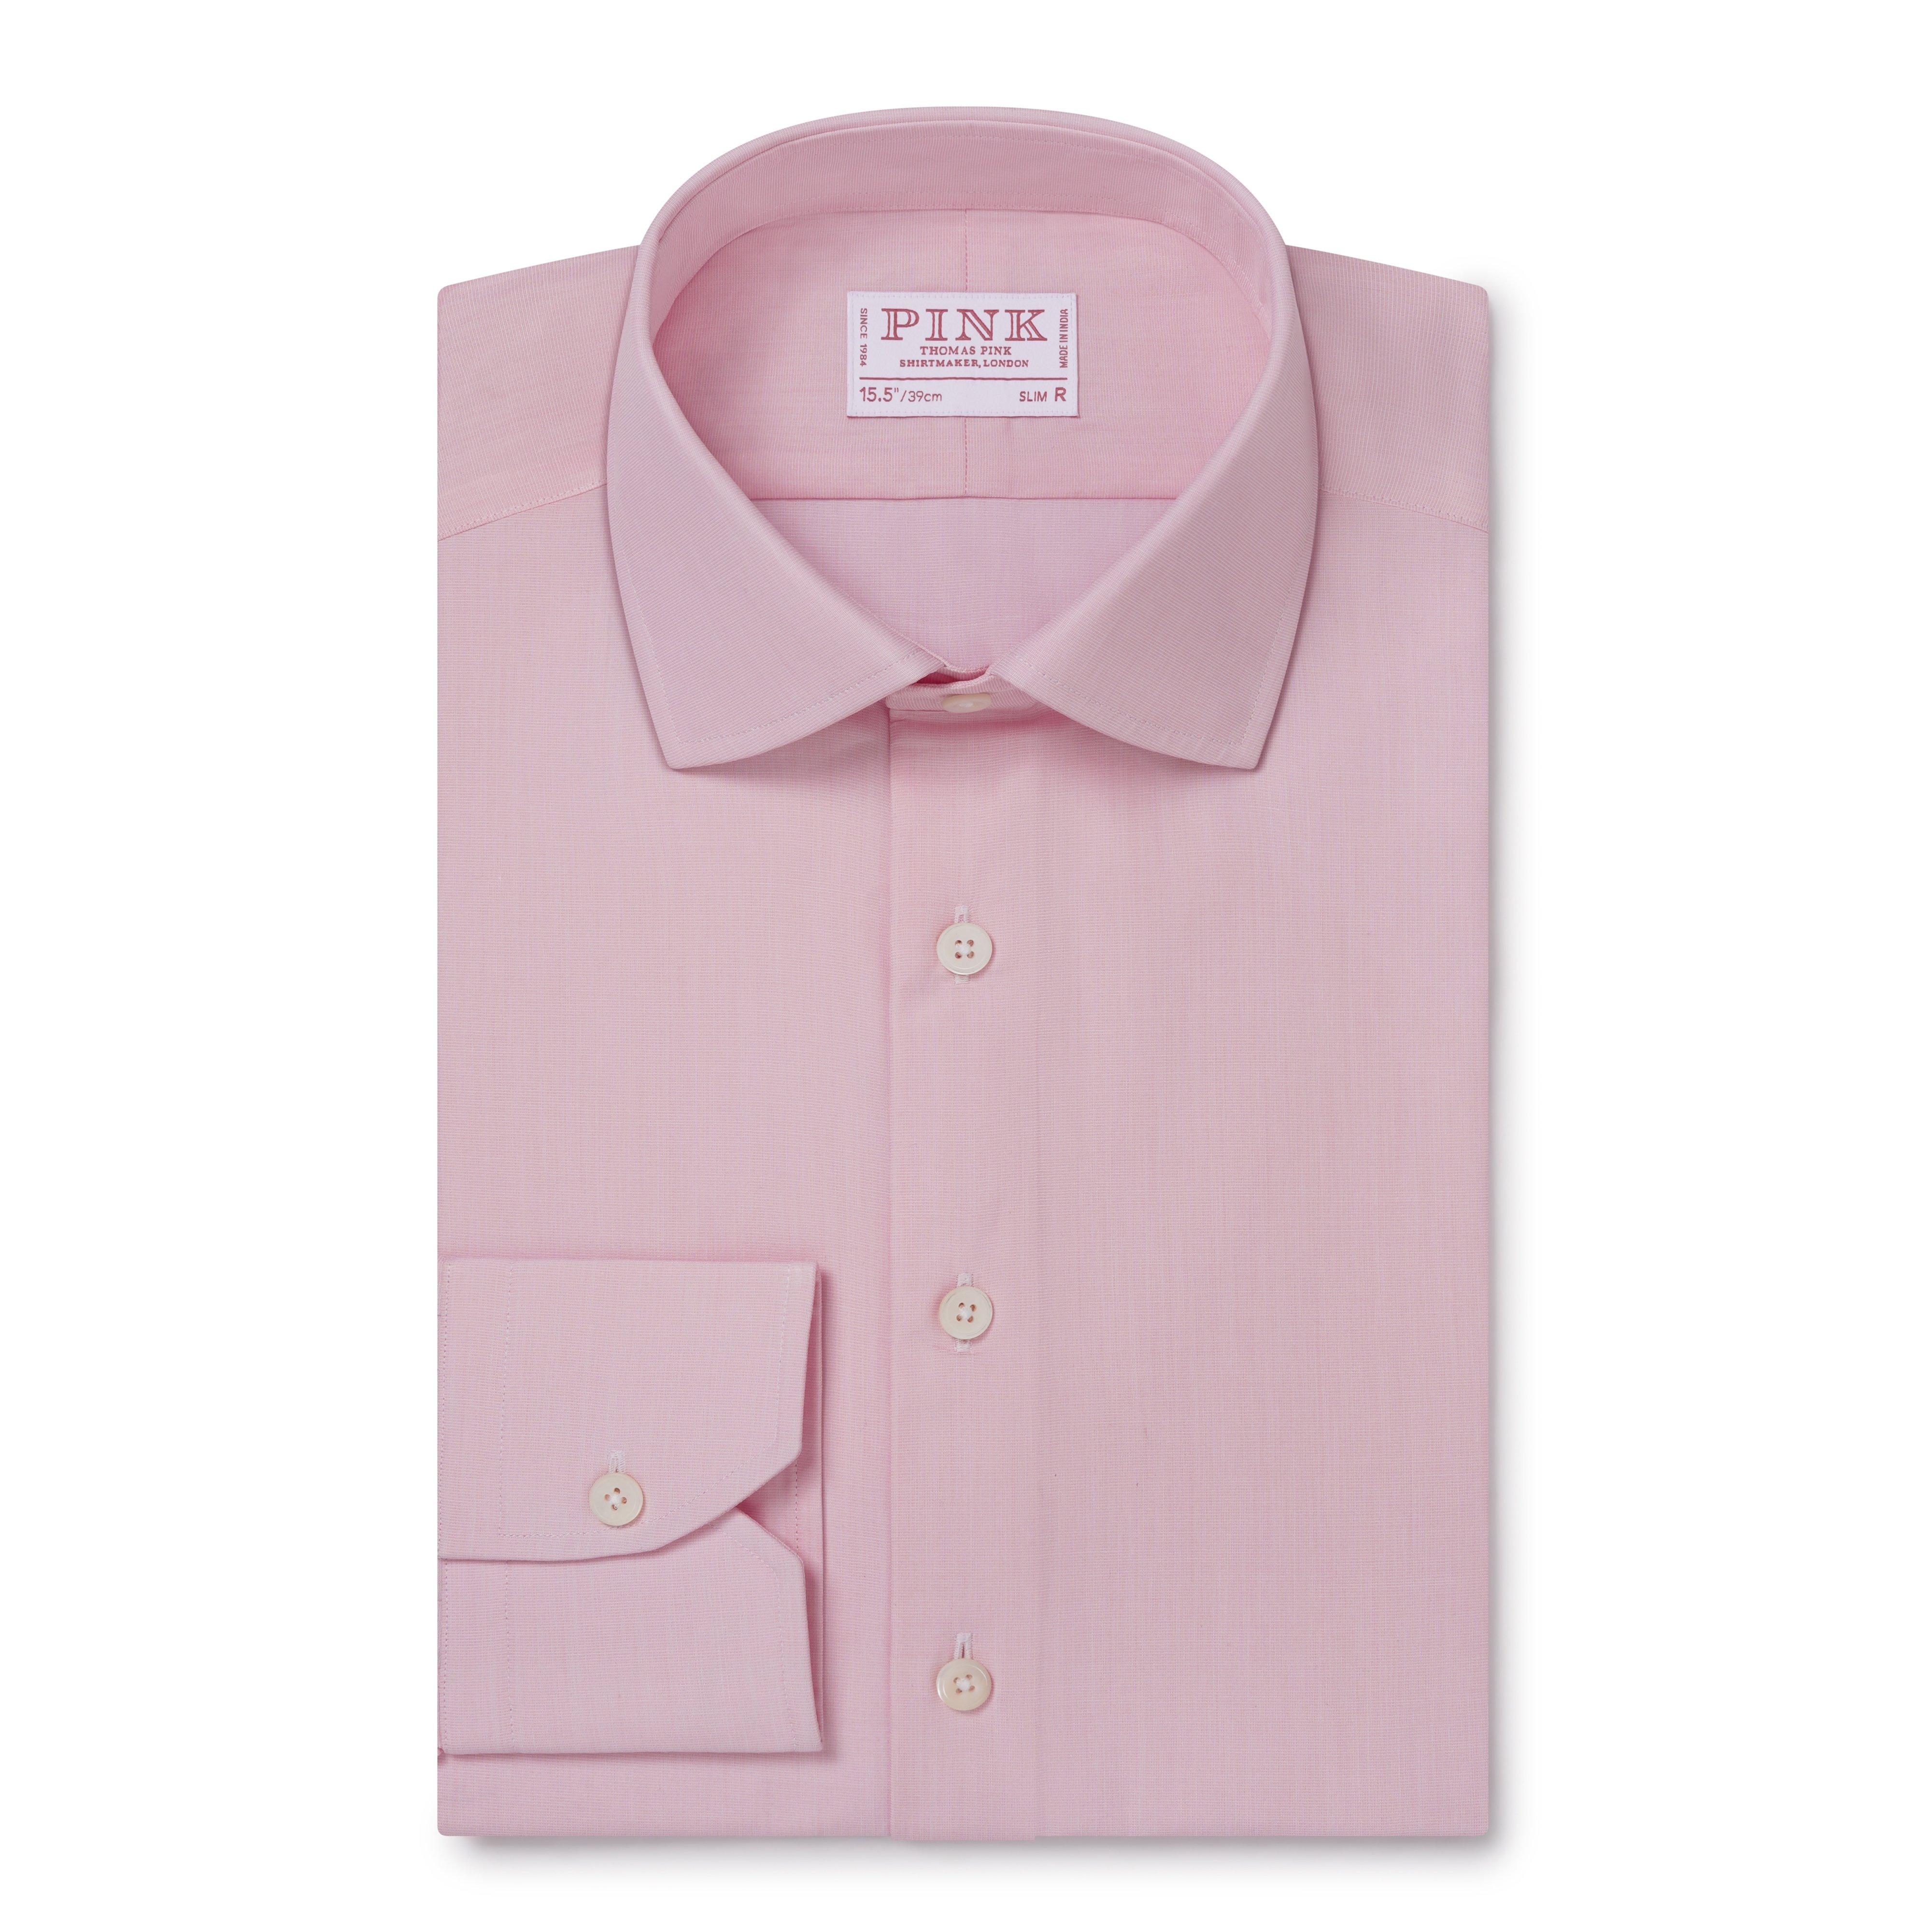 Thomas Pink French Cuff Slim Fit Shirt 16 32 Pink Stripe Cotton Mint YGI  G1-393